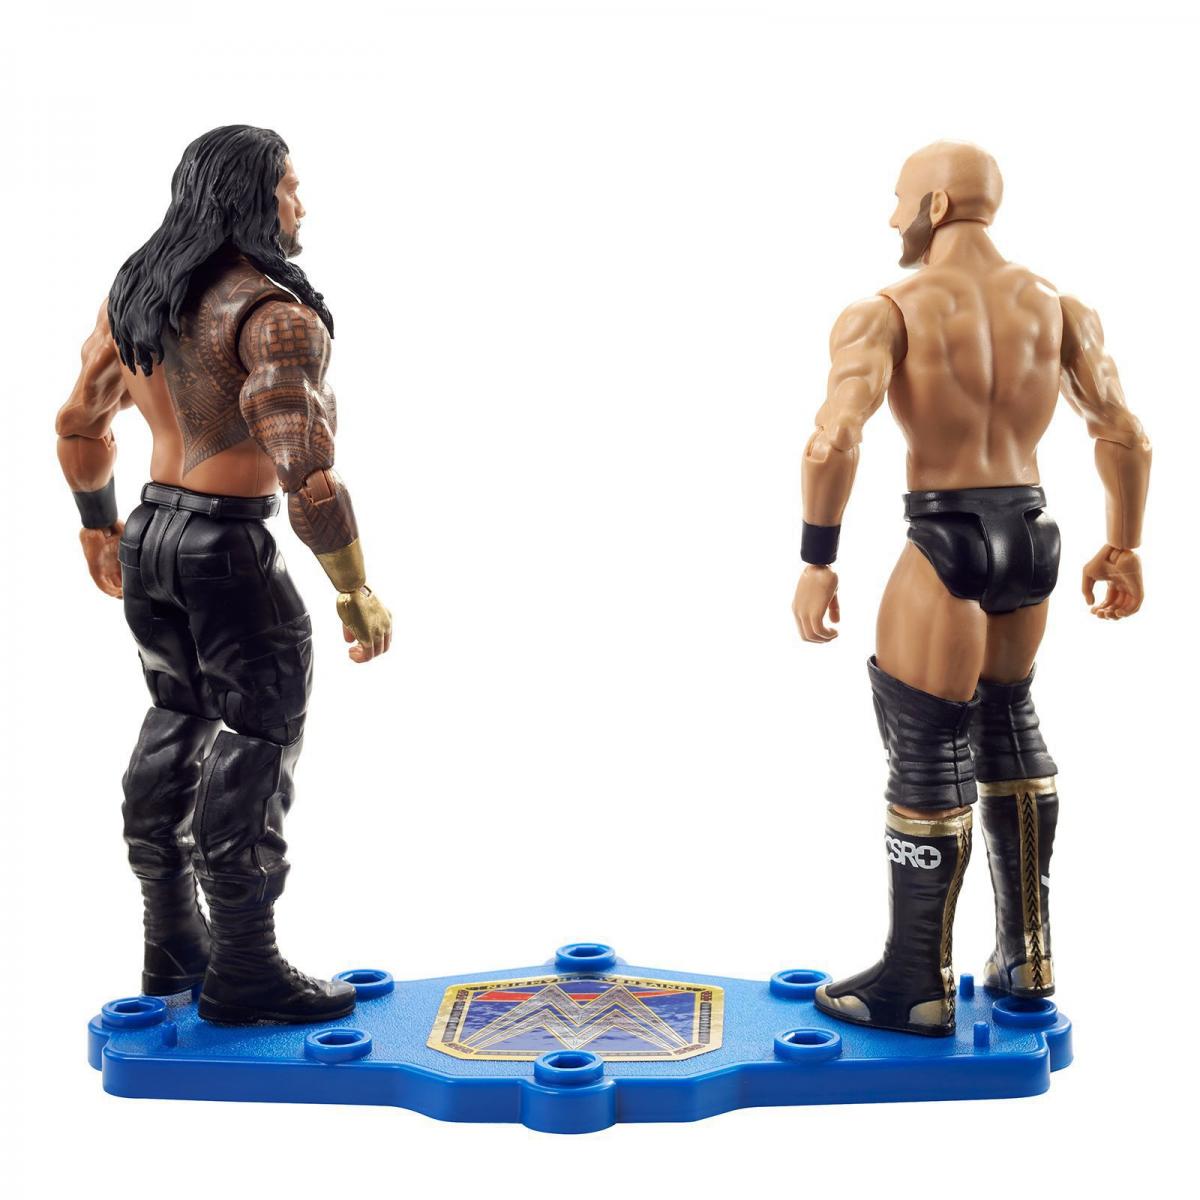 2021 WWE Mattel Basic Championship Showdown Series 7 Cesaro vs. Roman Reigns